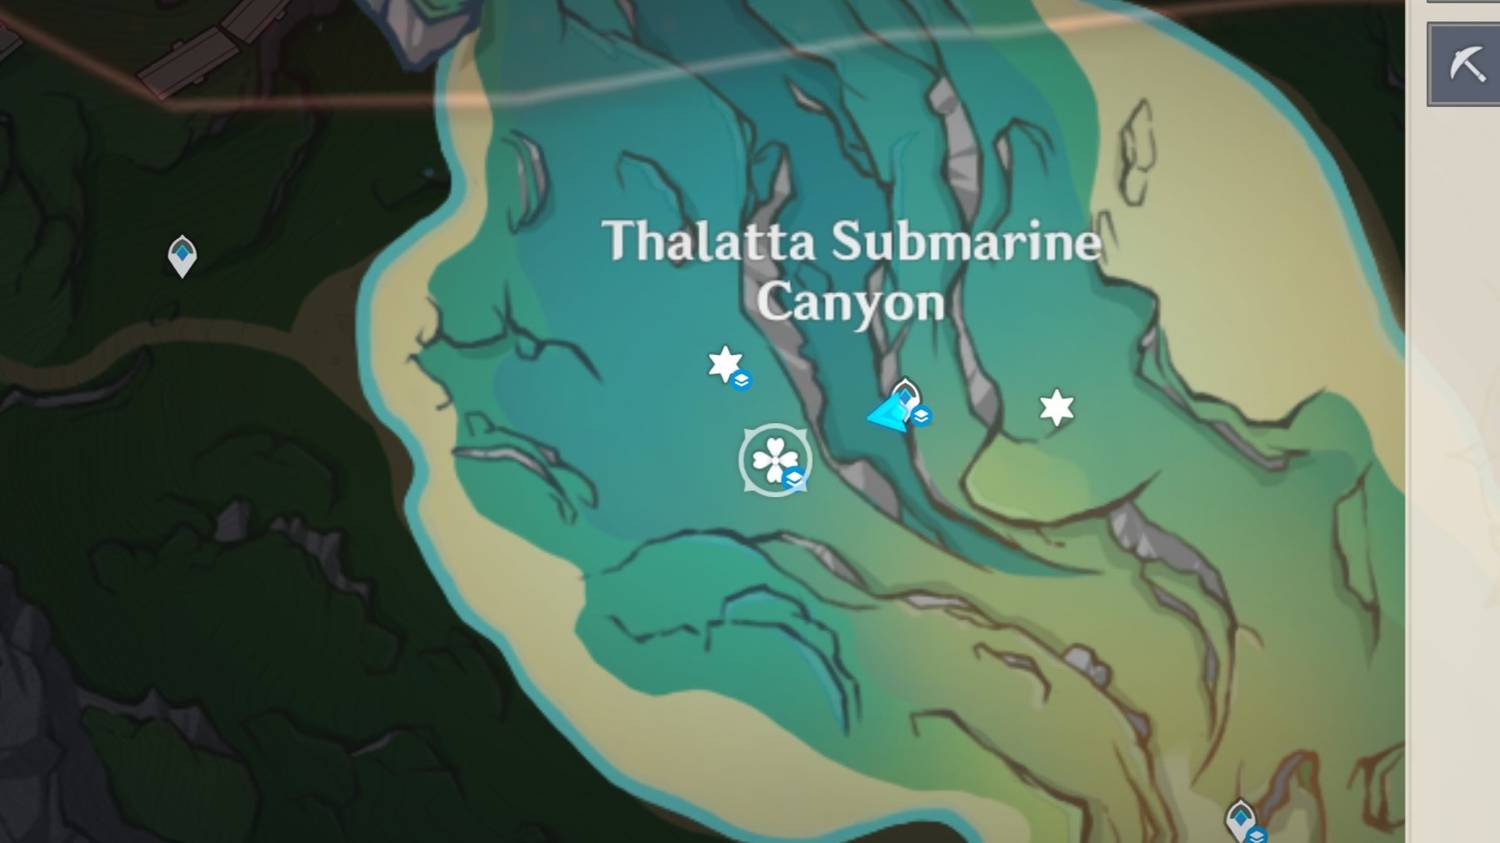 thalatta-submarine-canyon-map.jpg (1500×843)